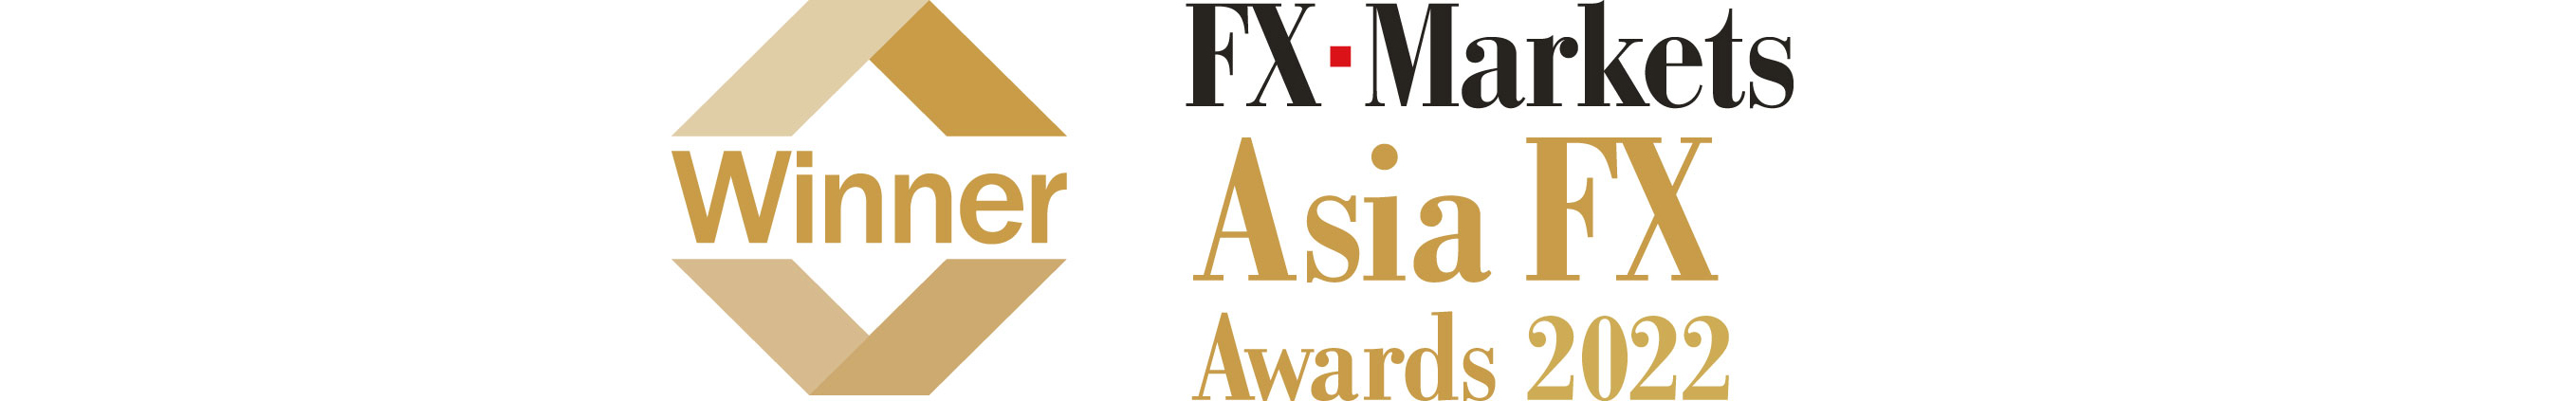 FX Markets Asia FX Awards 2022 BB8